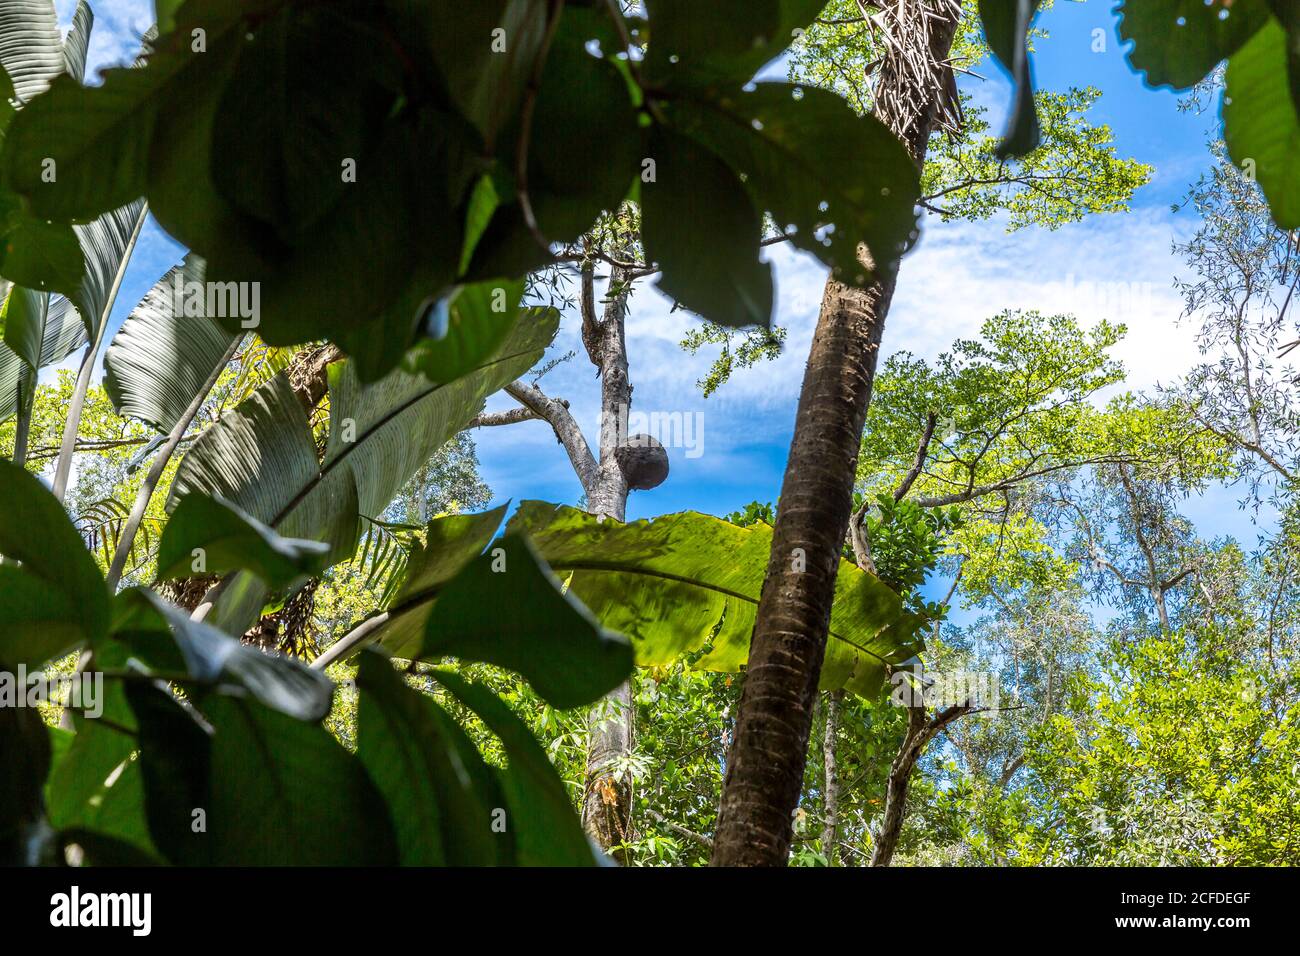 Nido di termite sull'albero, Parco Nazionale di Ivooloina, Fiume Ivooloina, Taomasina, Tamatave, Madagascar, Africa, Oceano Indiano Foto Stock